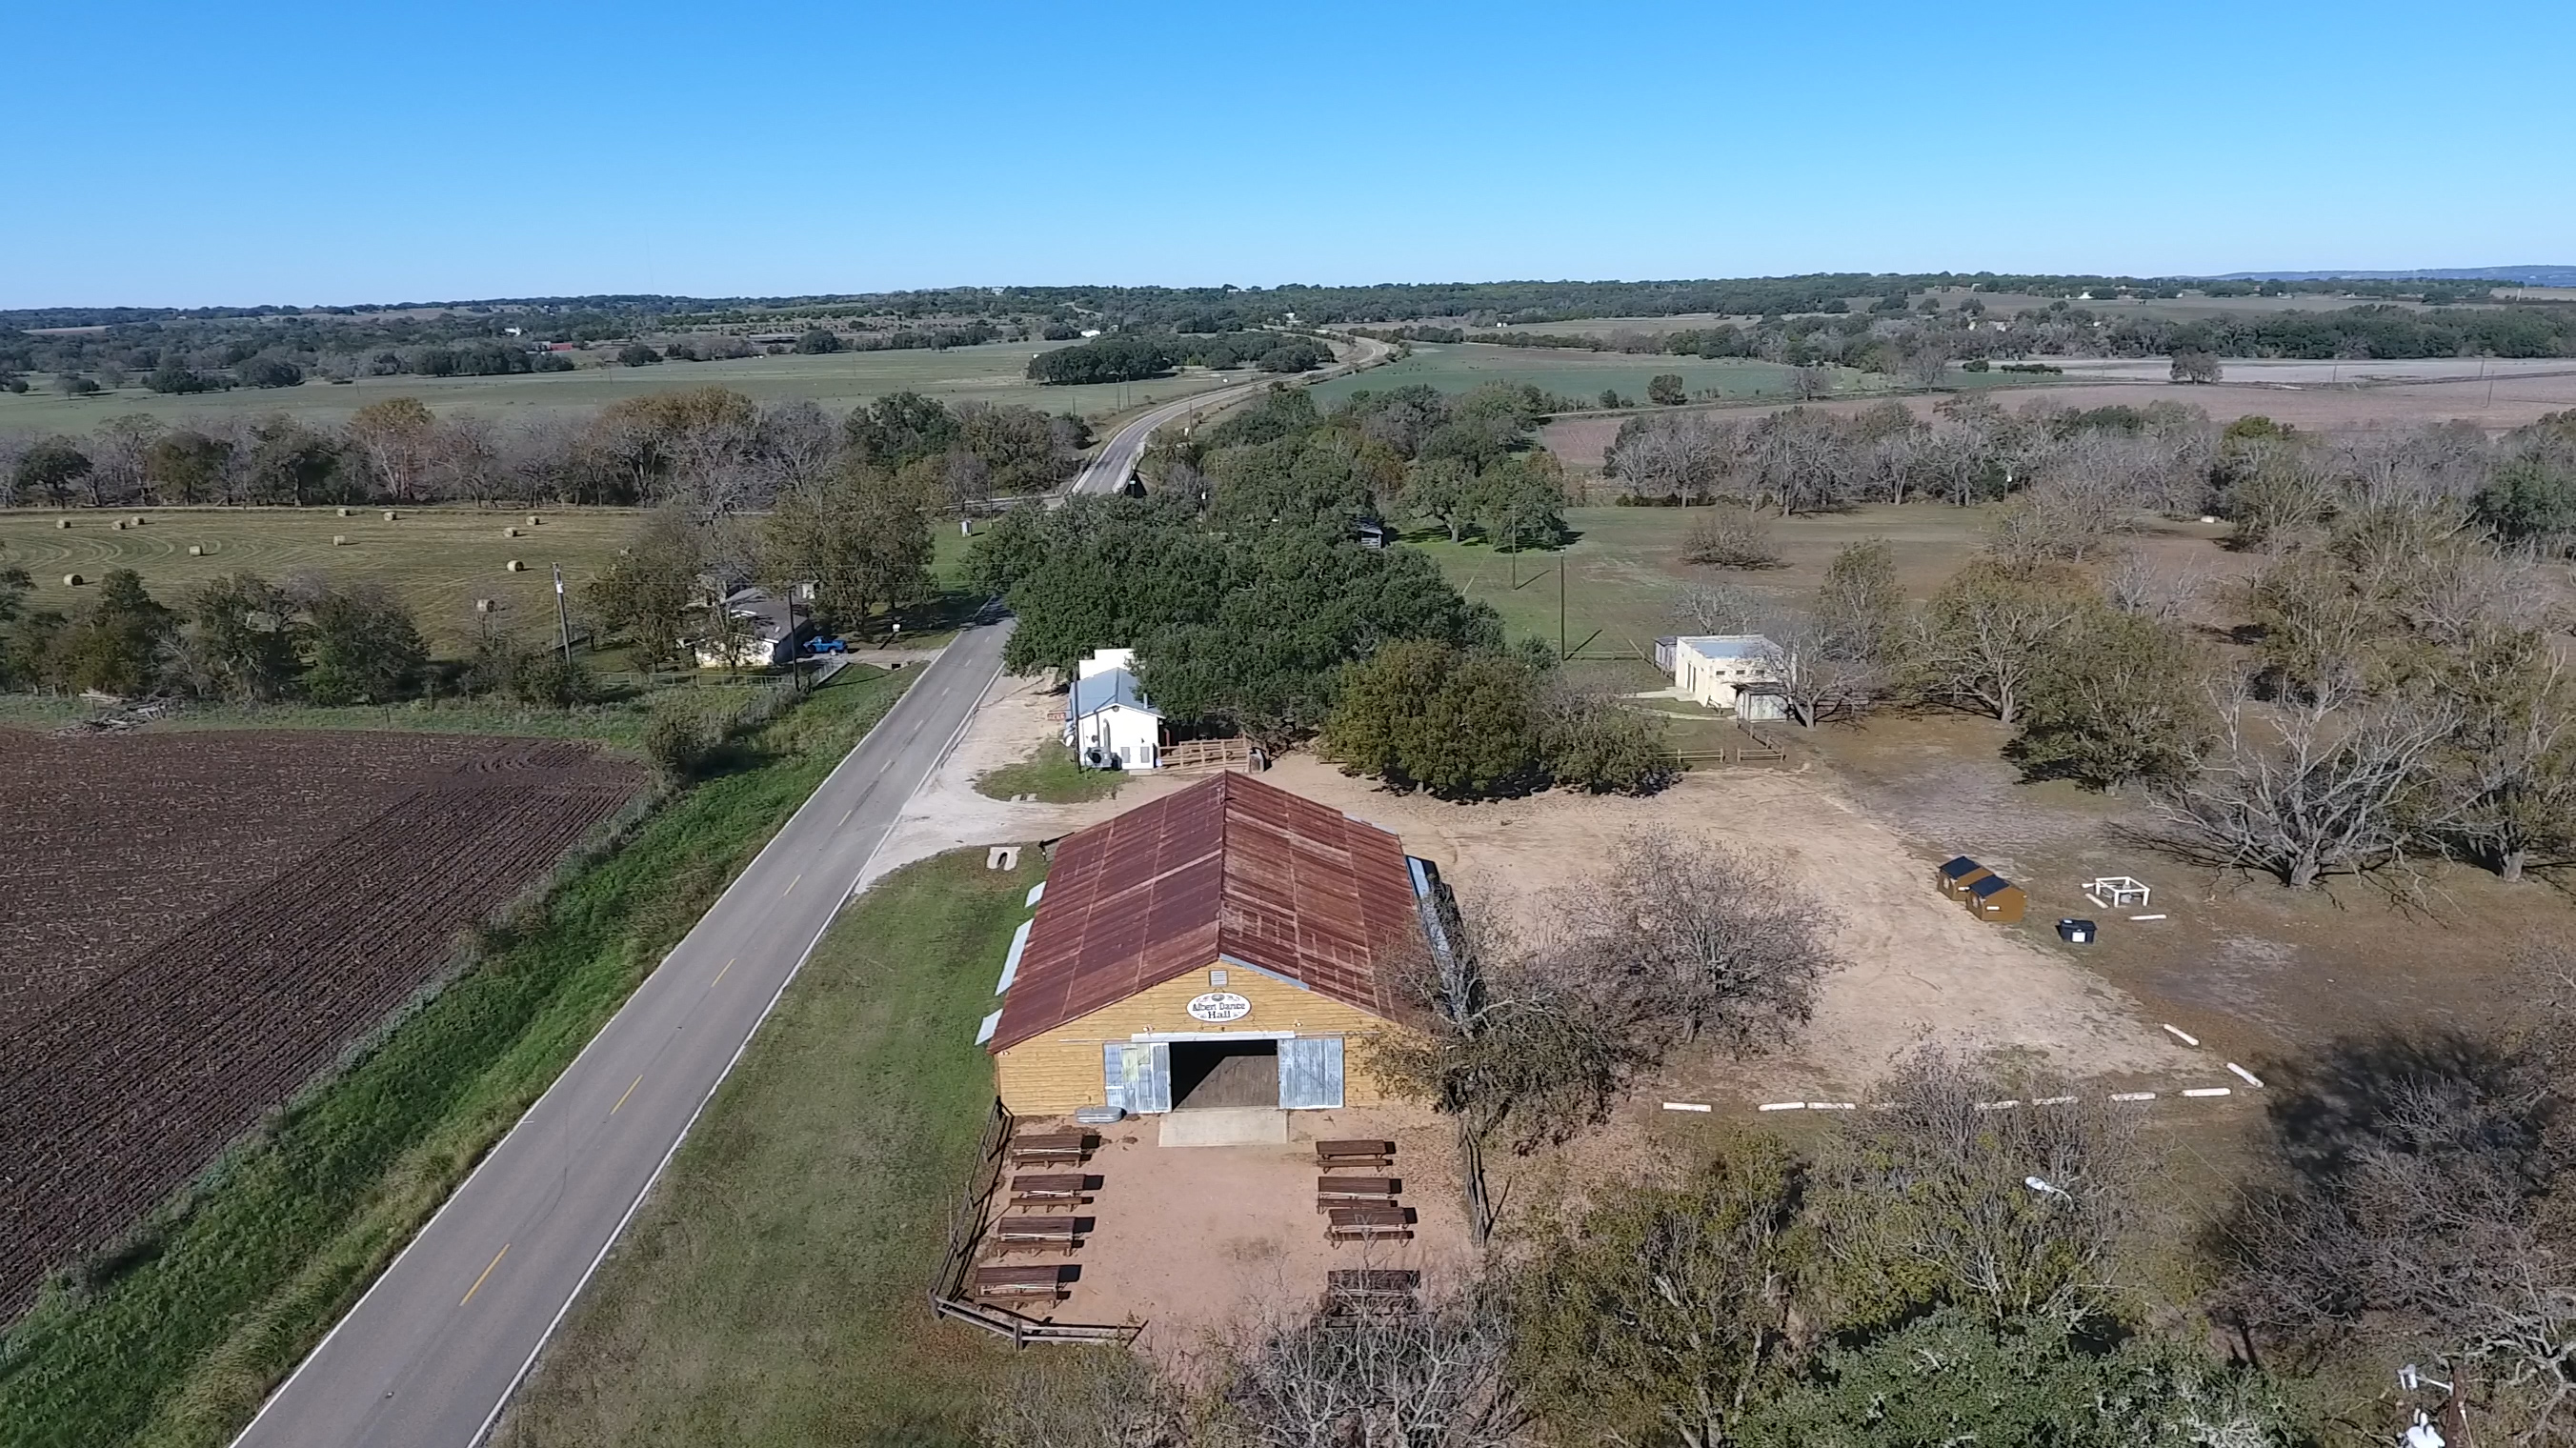 Albert Texas Town for sale